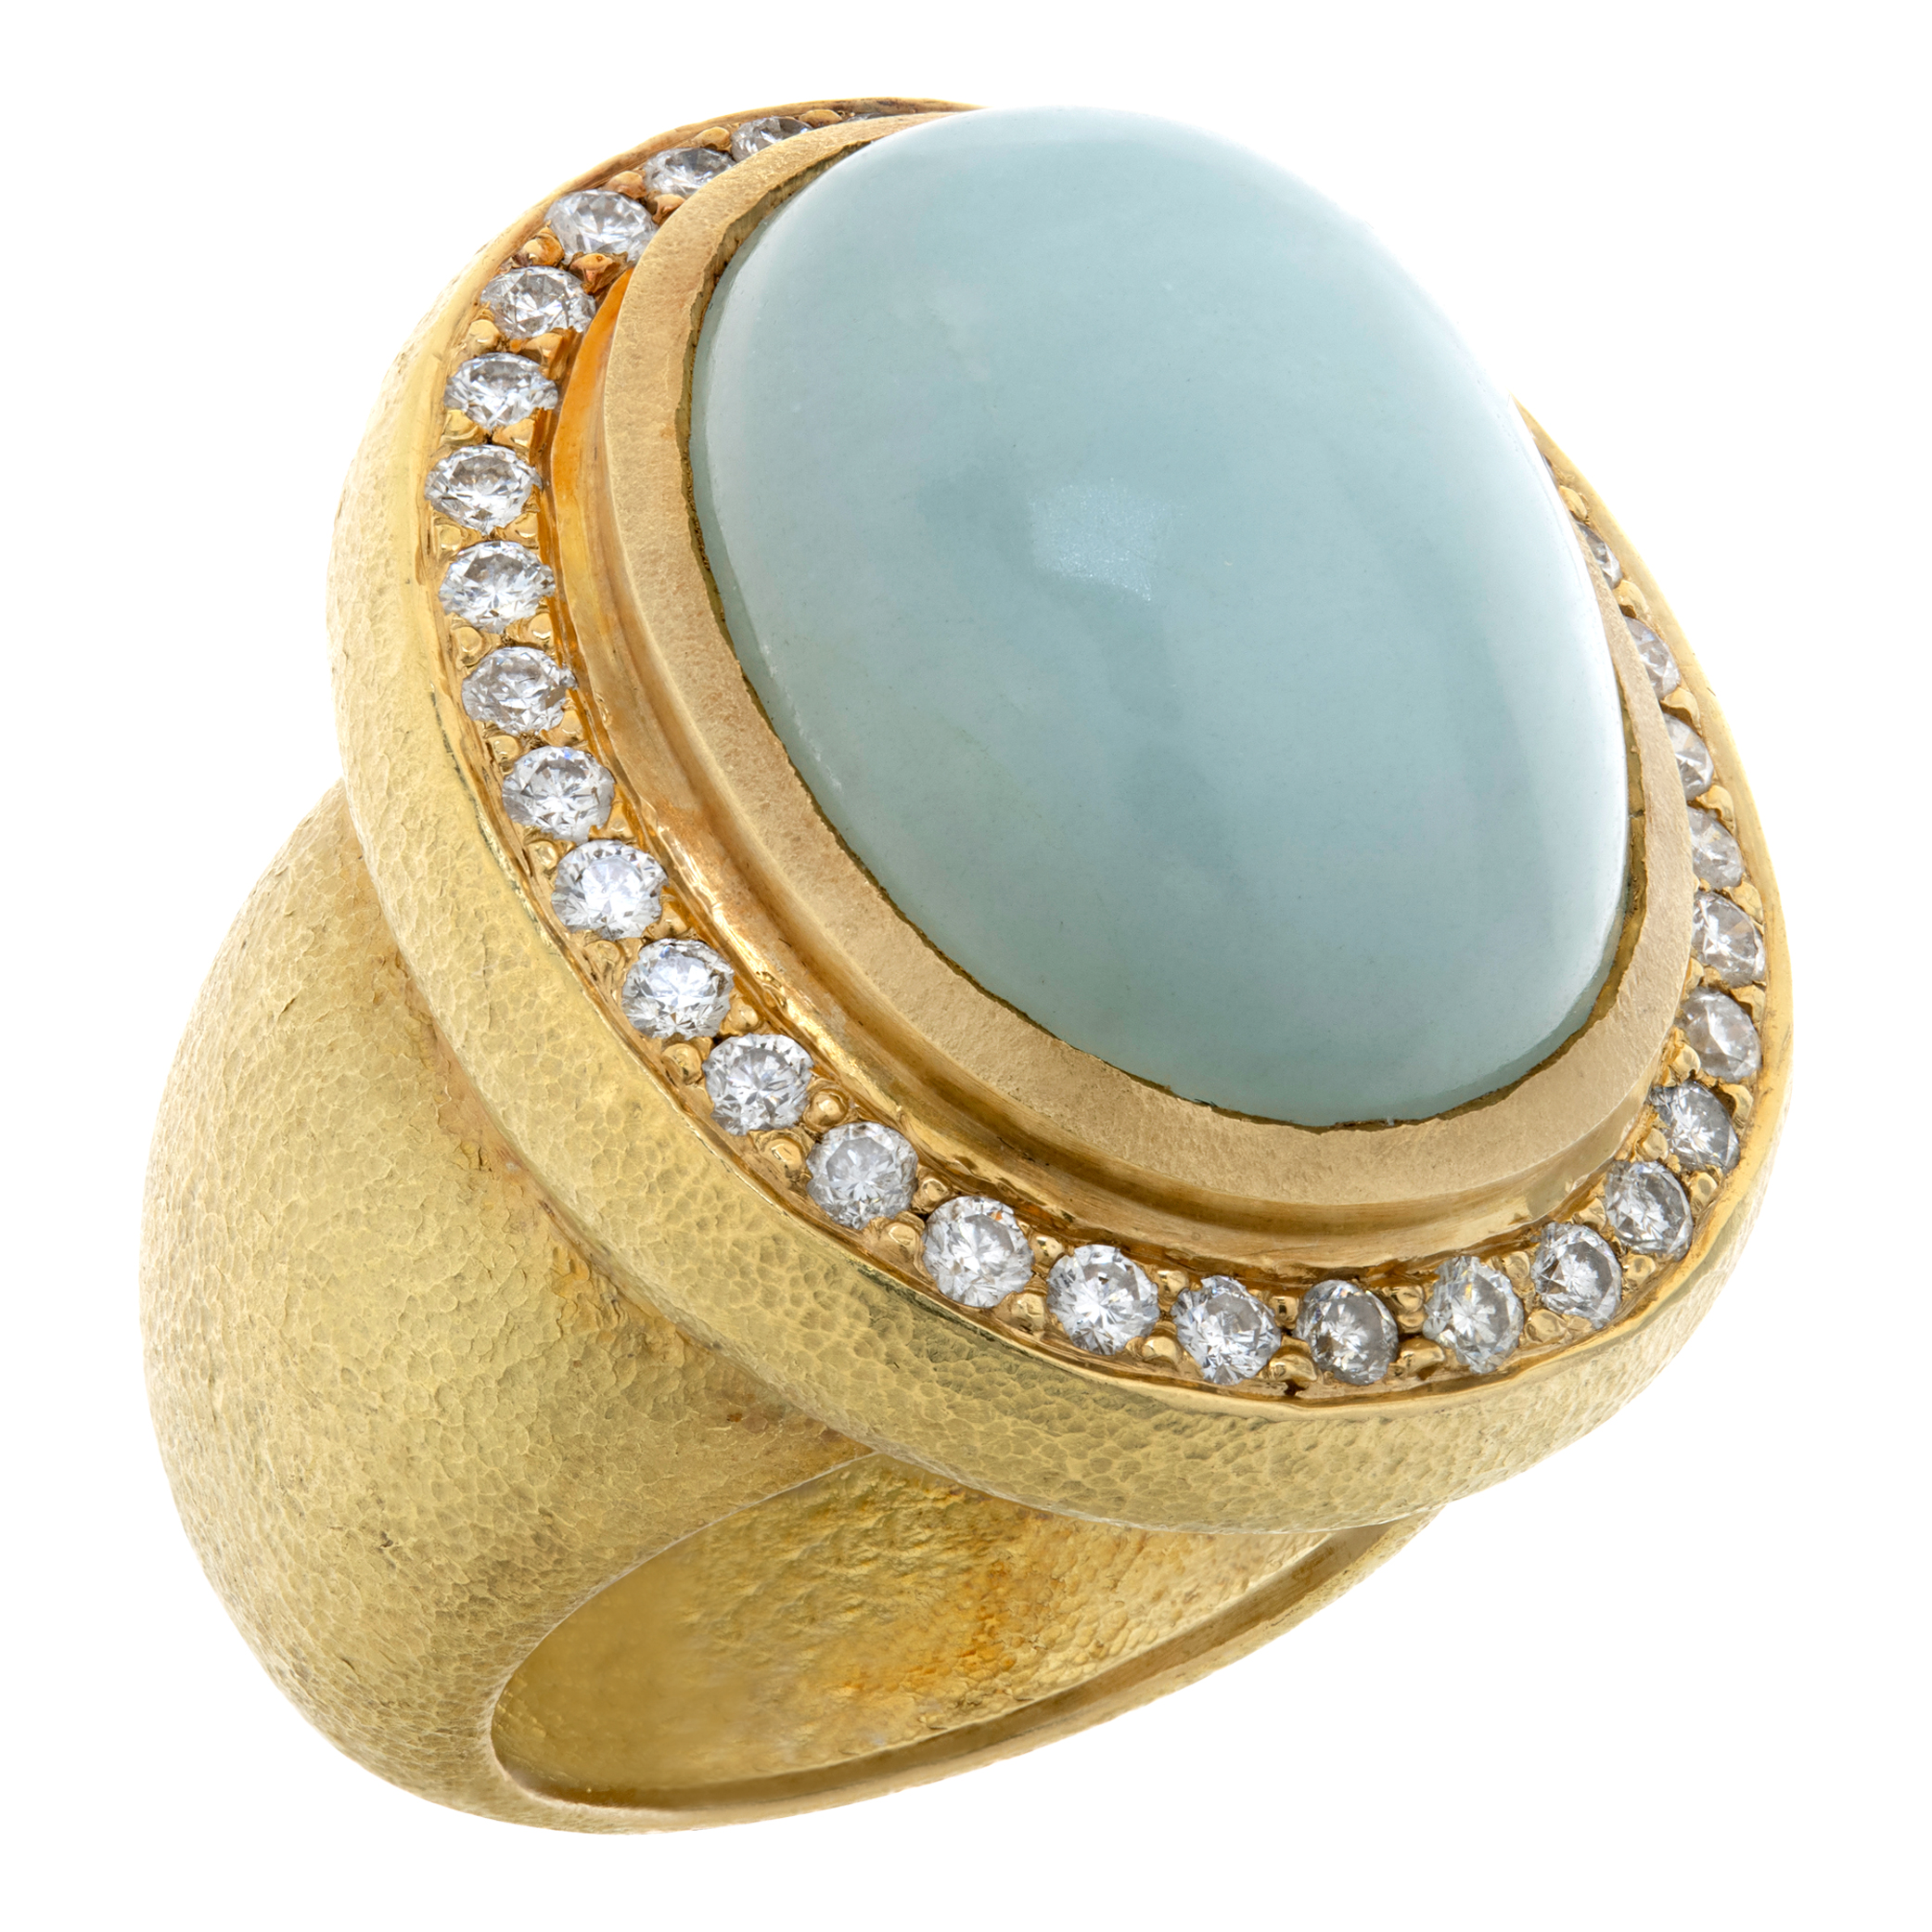 Seafoam chalcedony ring with 1 carat in diamonds (Stones) image 3